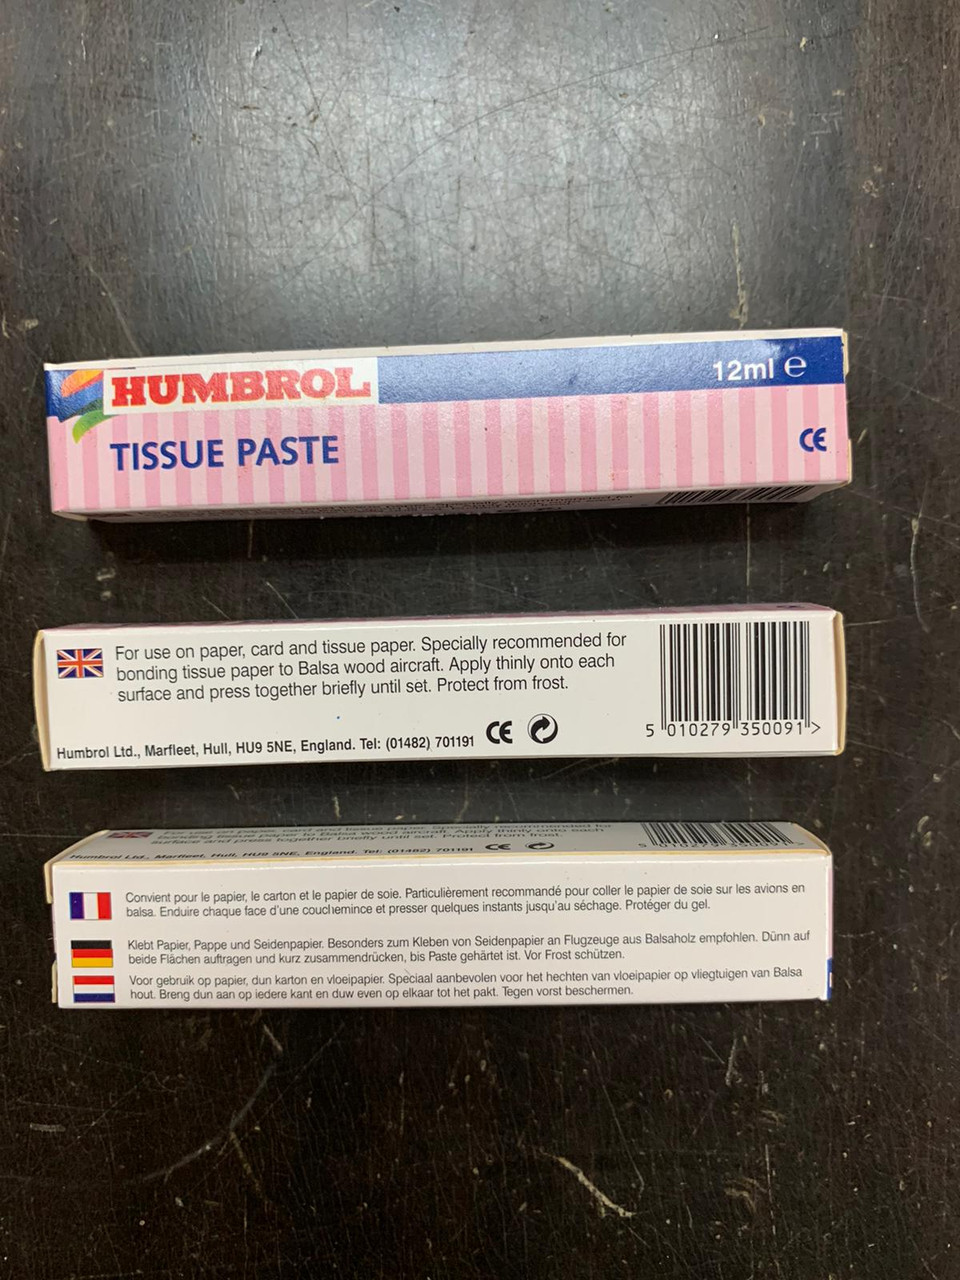 Humbrol Tissue Paste 12ml